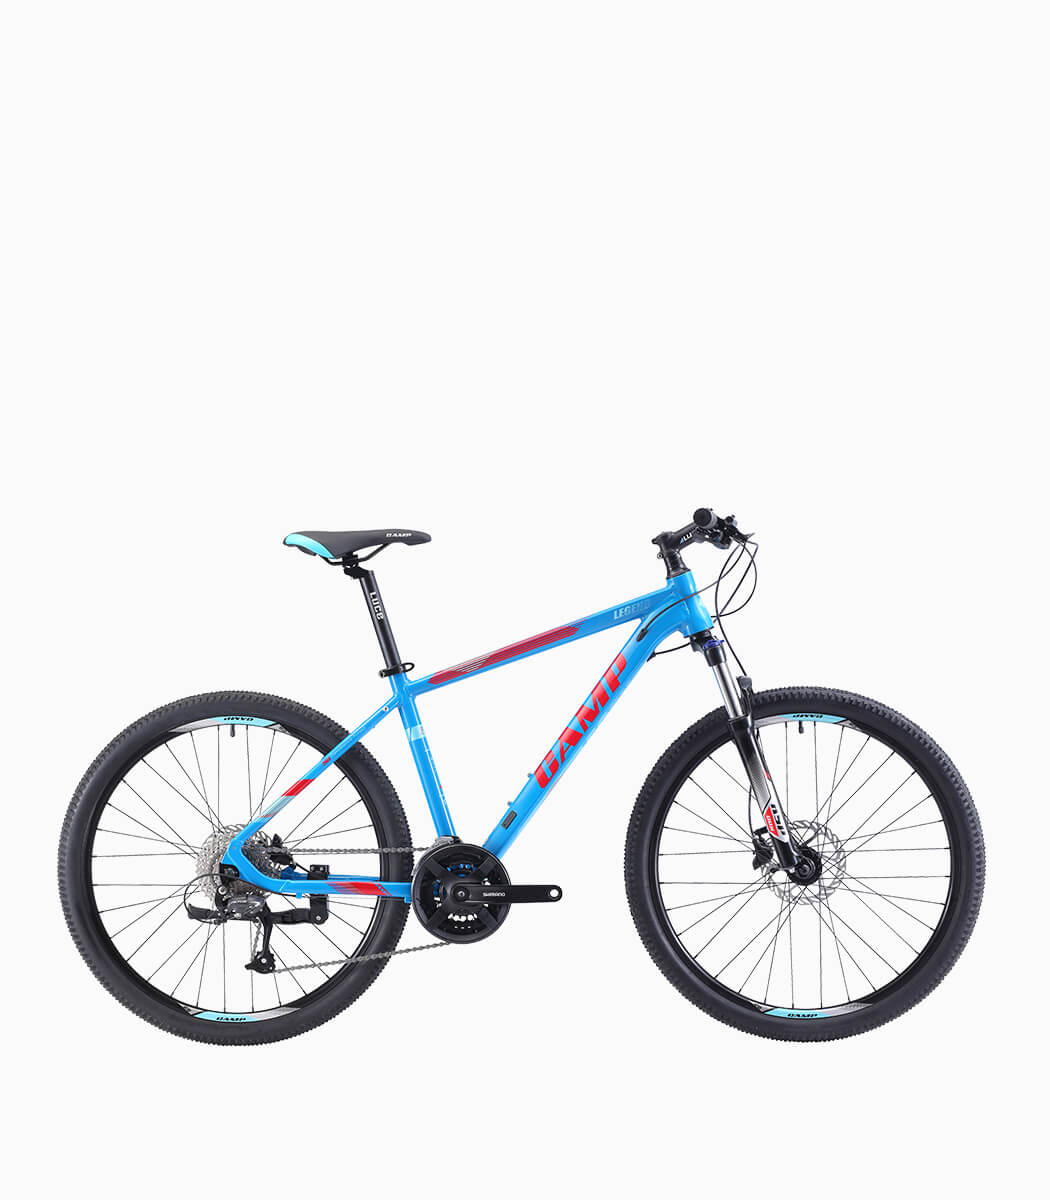 CAMP iLEAP GTX (BLUE-RED) mountain bike right